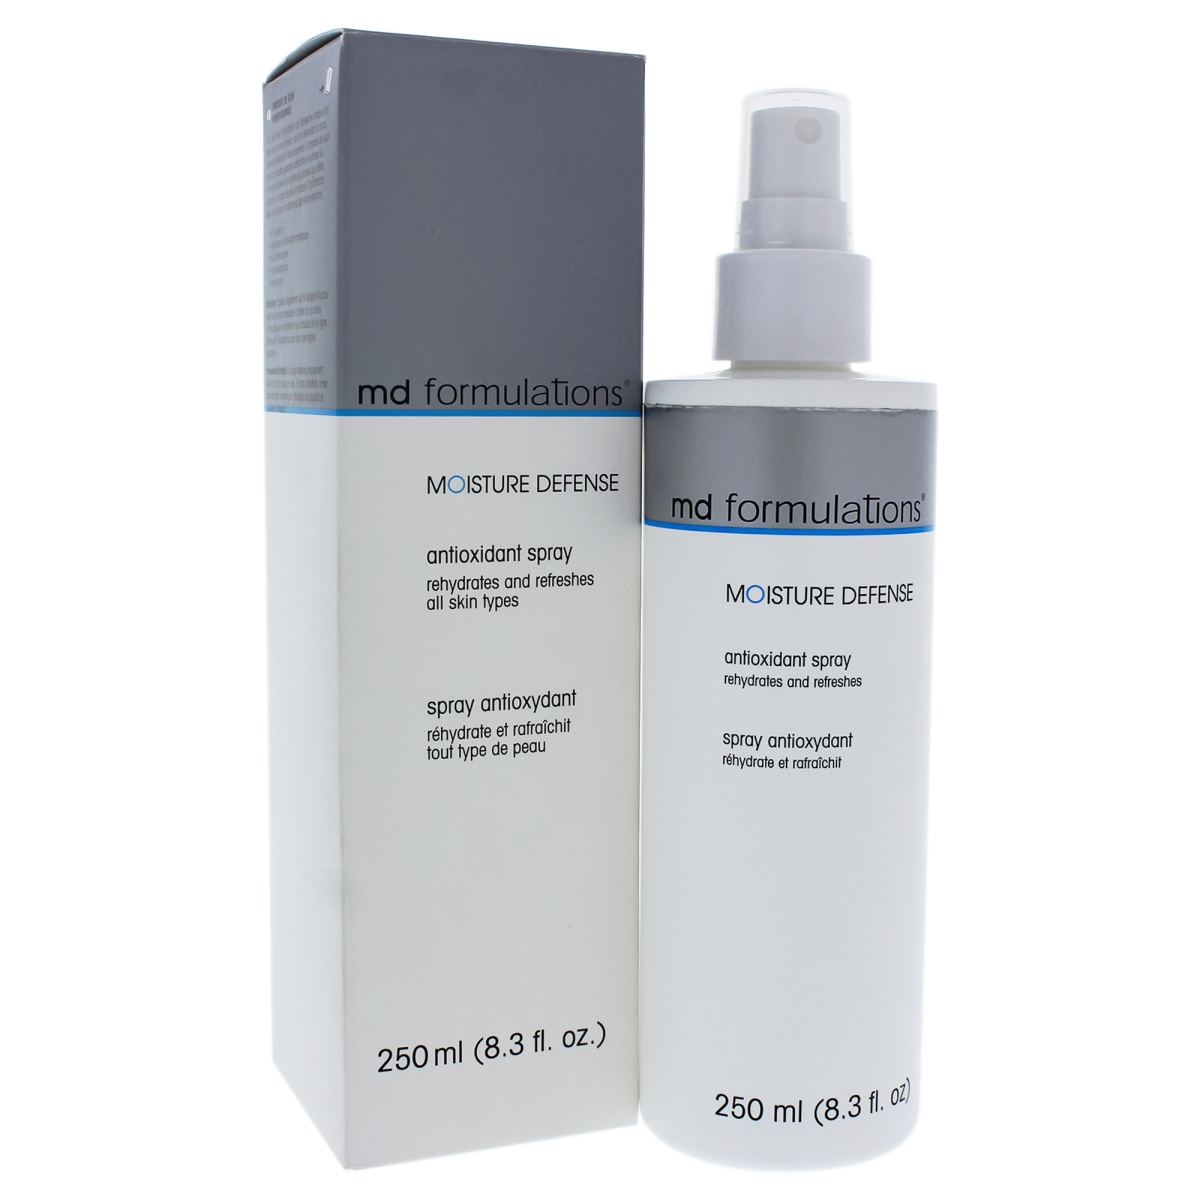 I0085673 Moisture Defense Antioxidant Spray For Women - 8.3 Oz